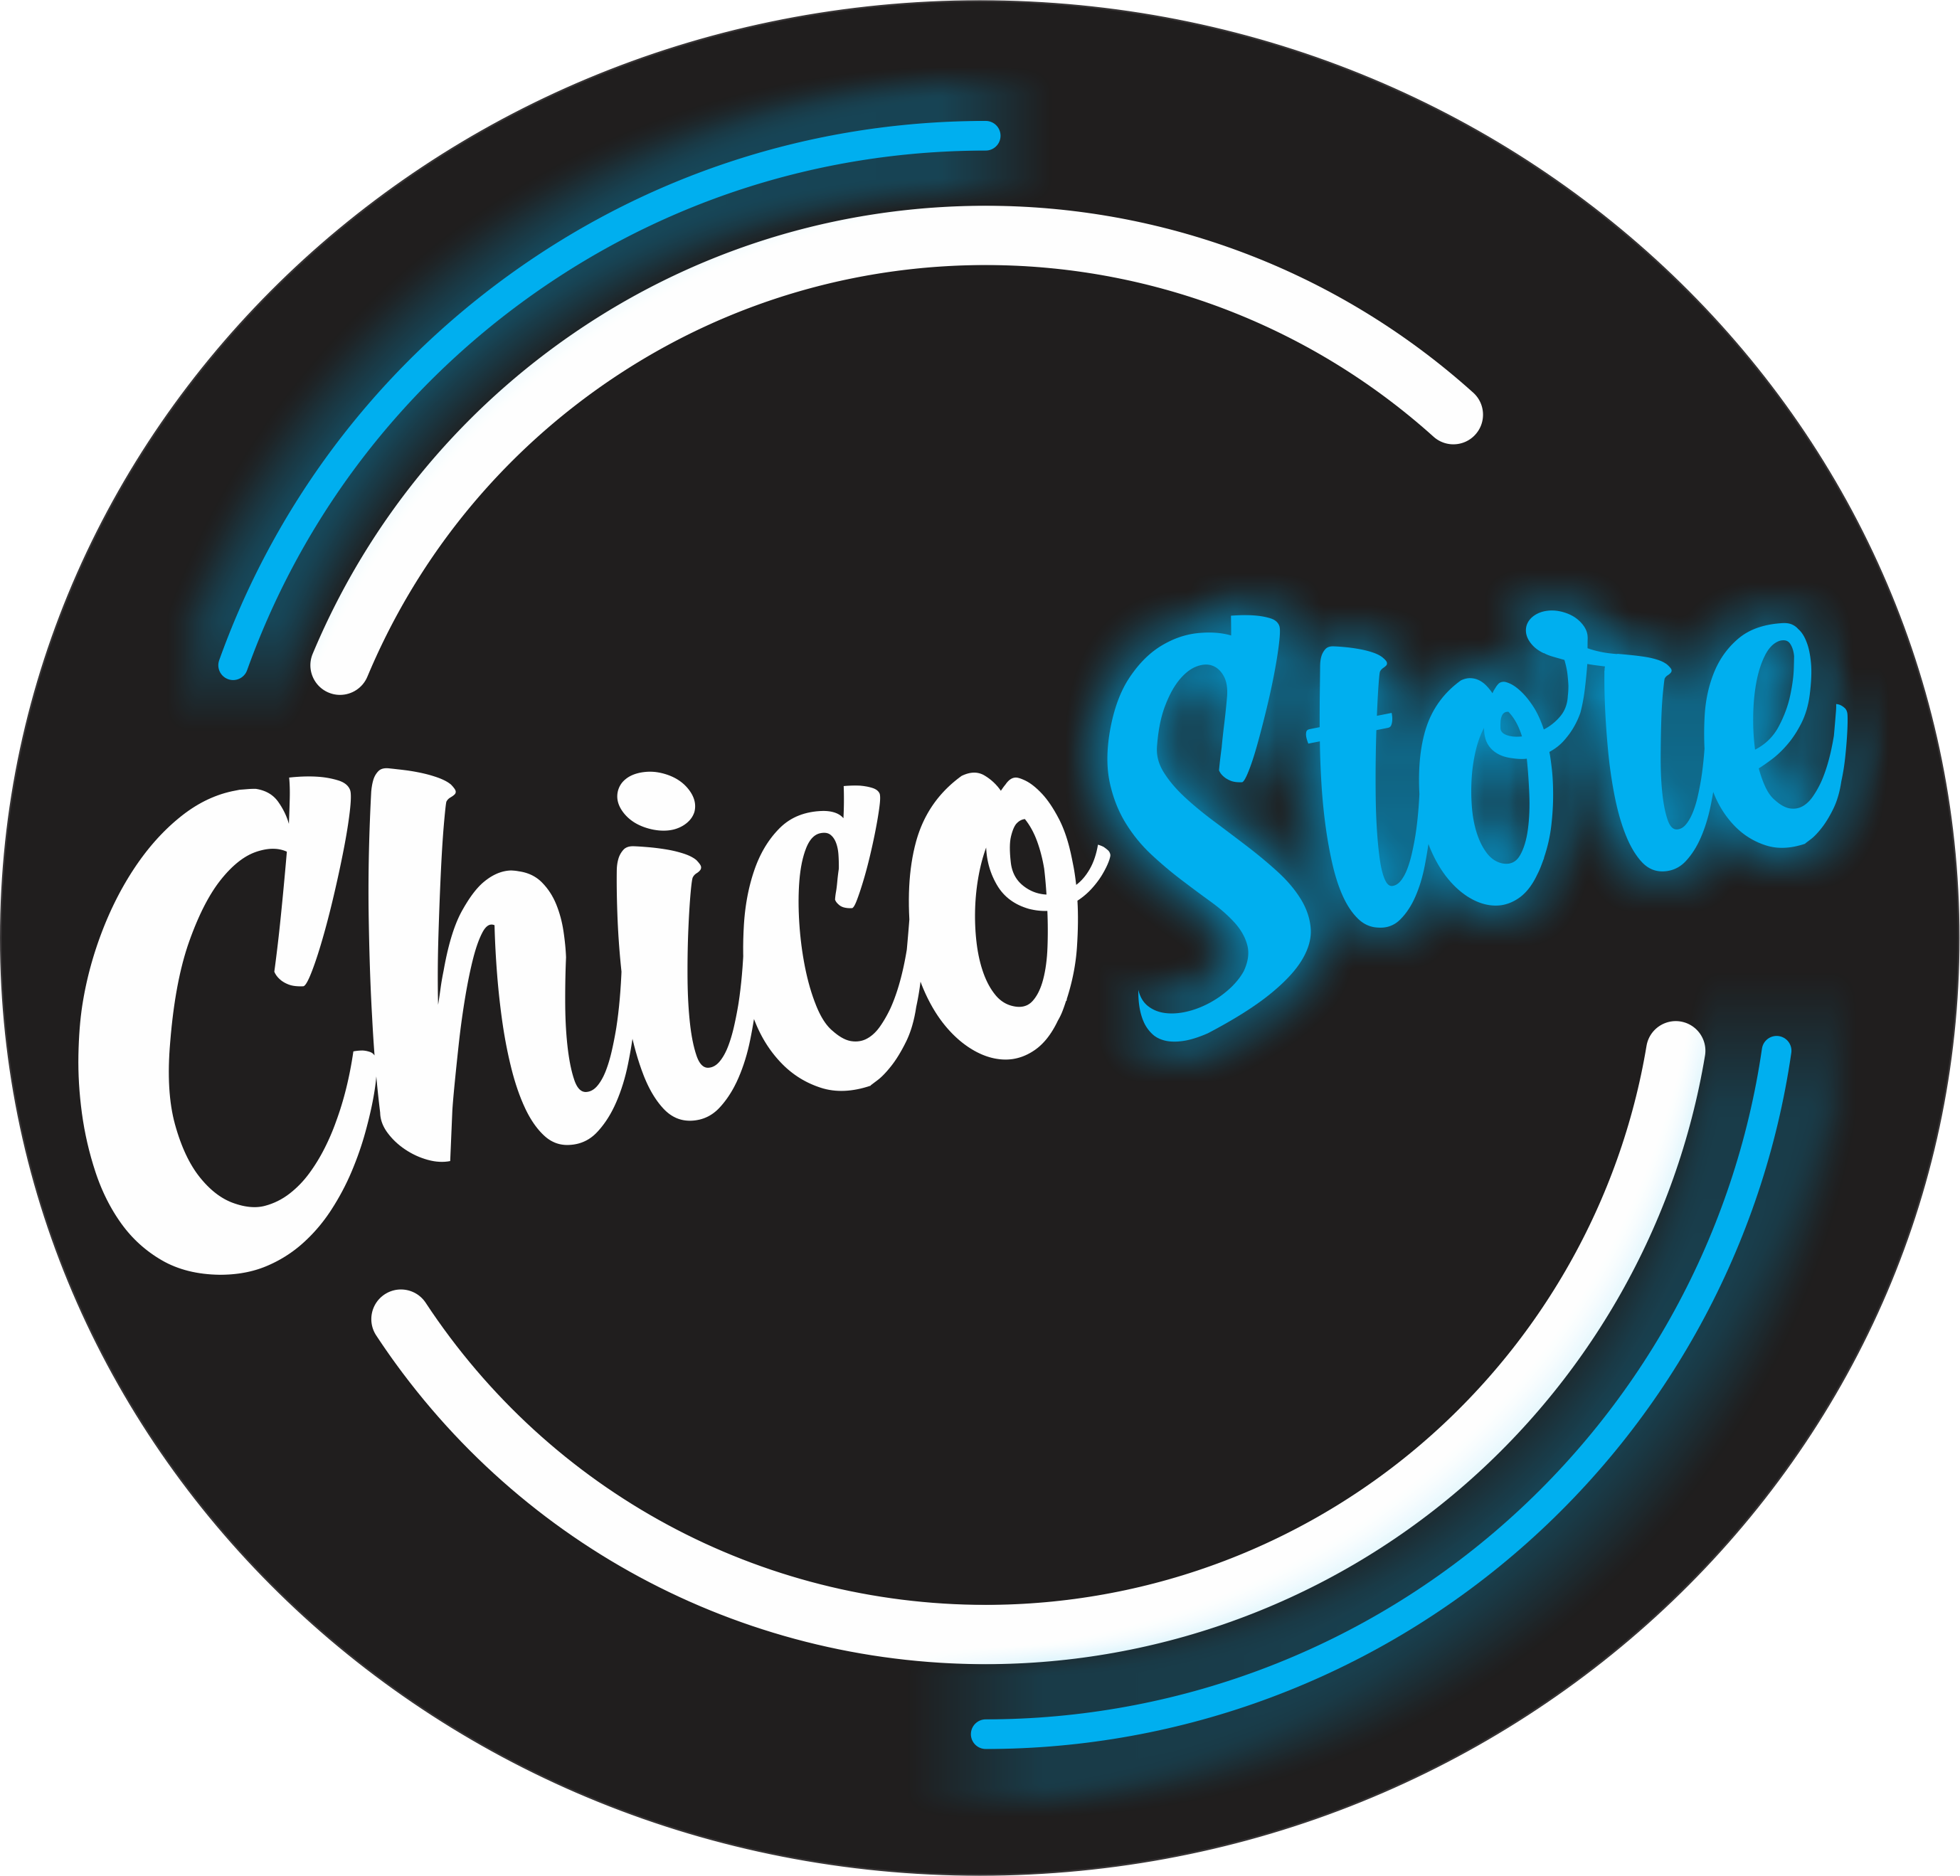 Chico Store